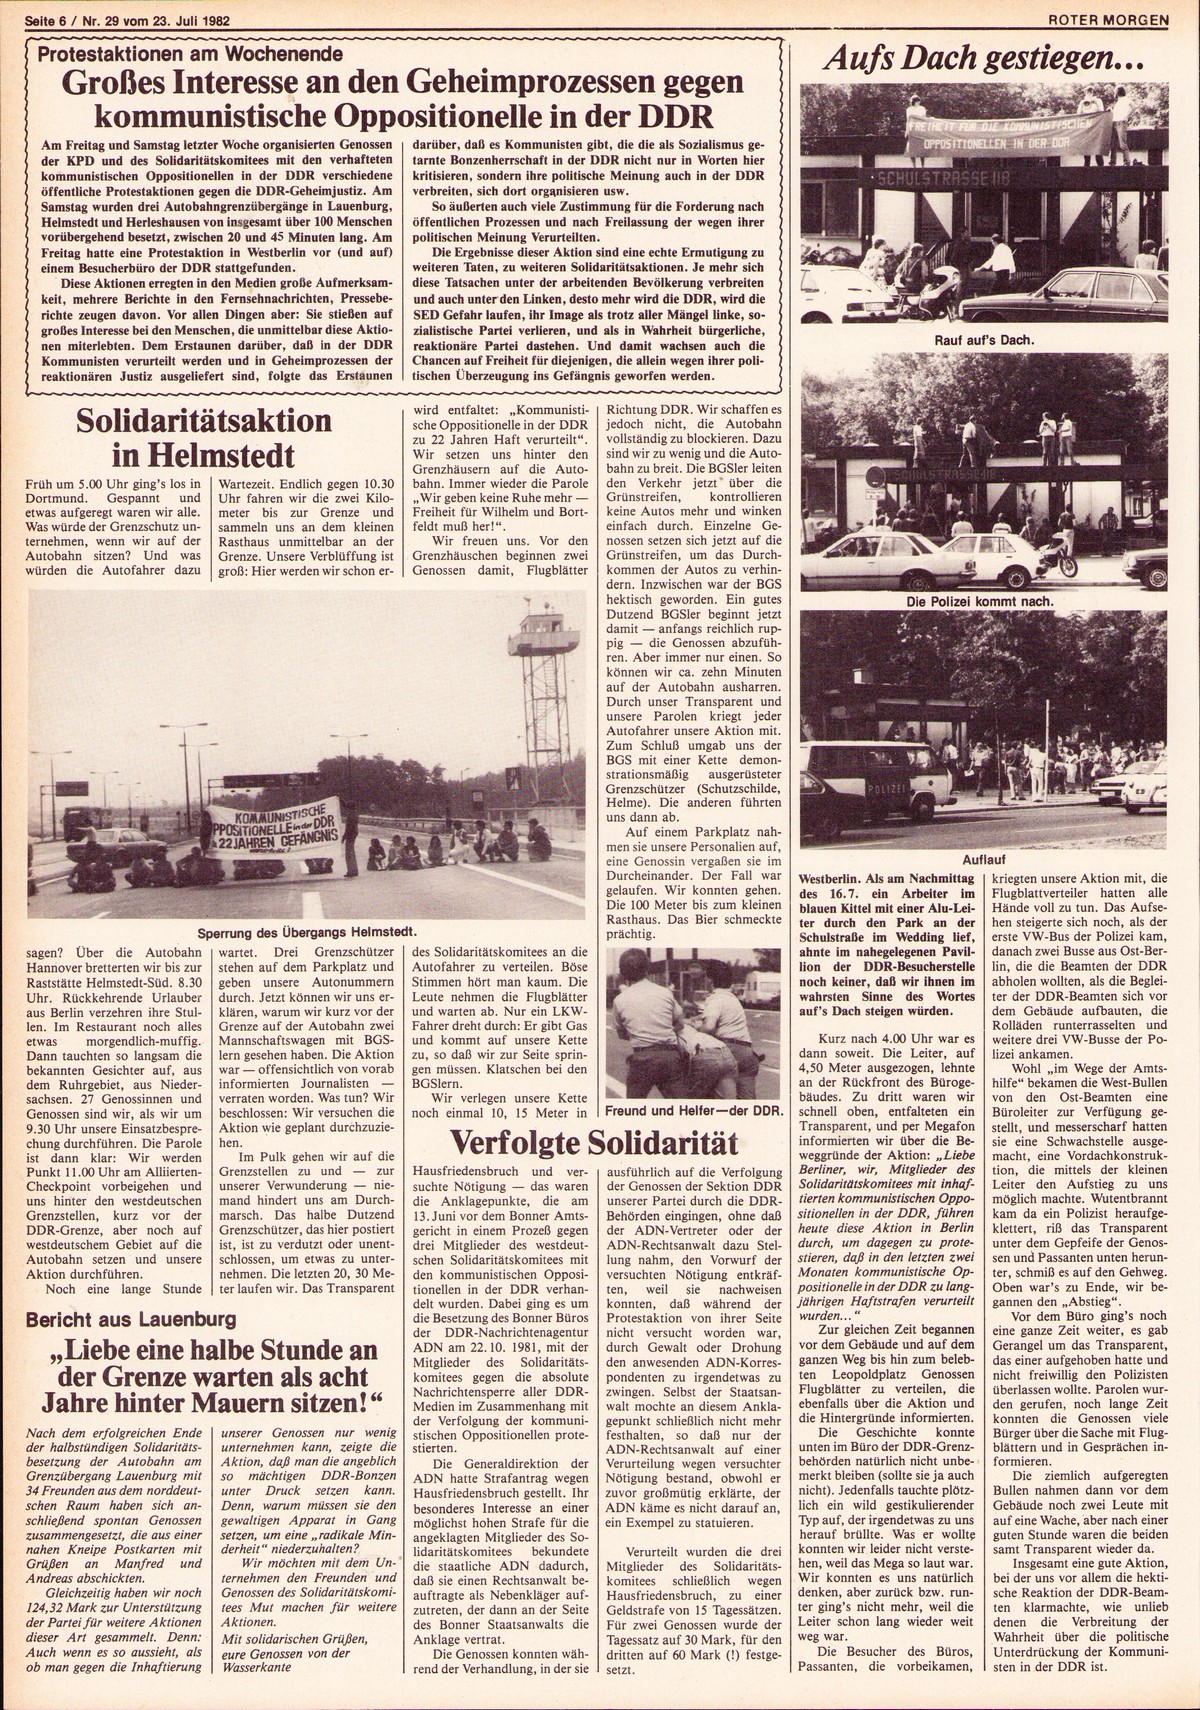 Roter Morgen, 16. Jg., 23. Juli 1982, Nr. 29, Seite 6